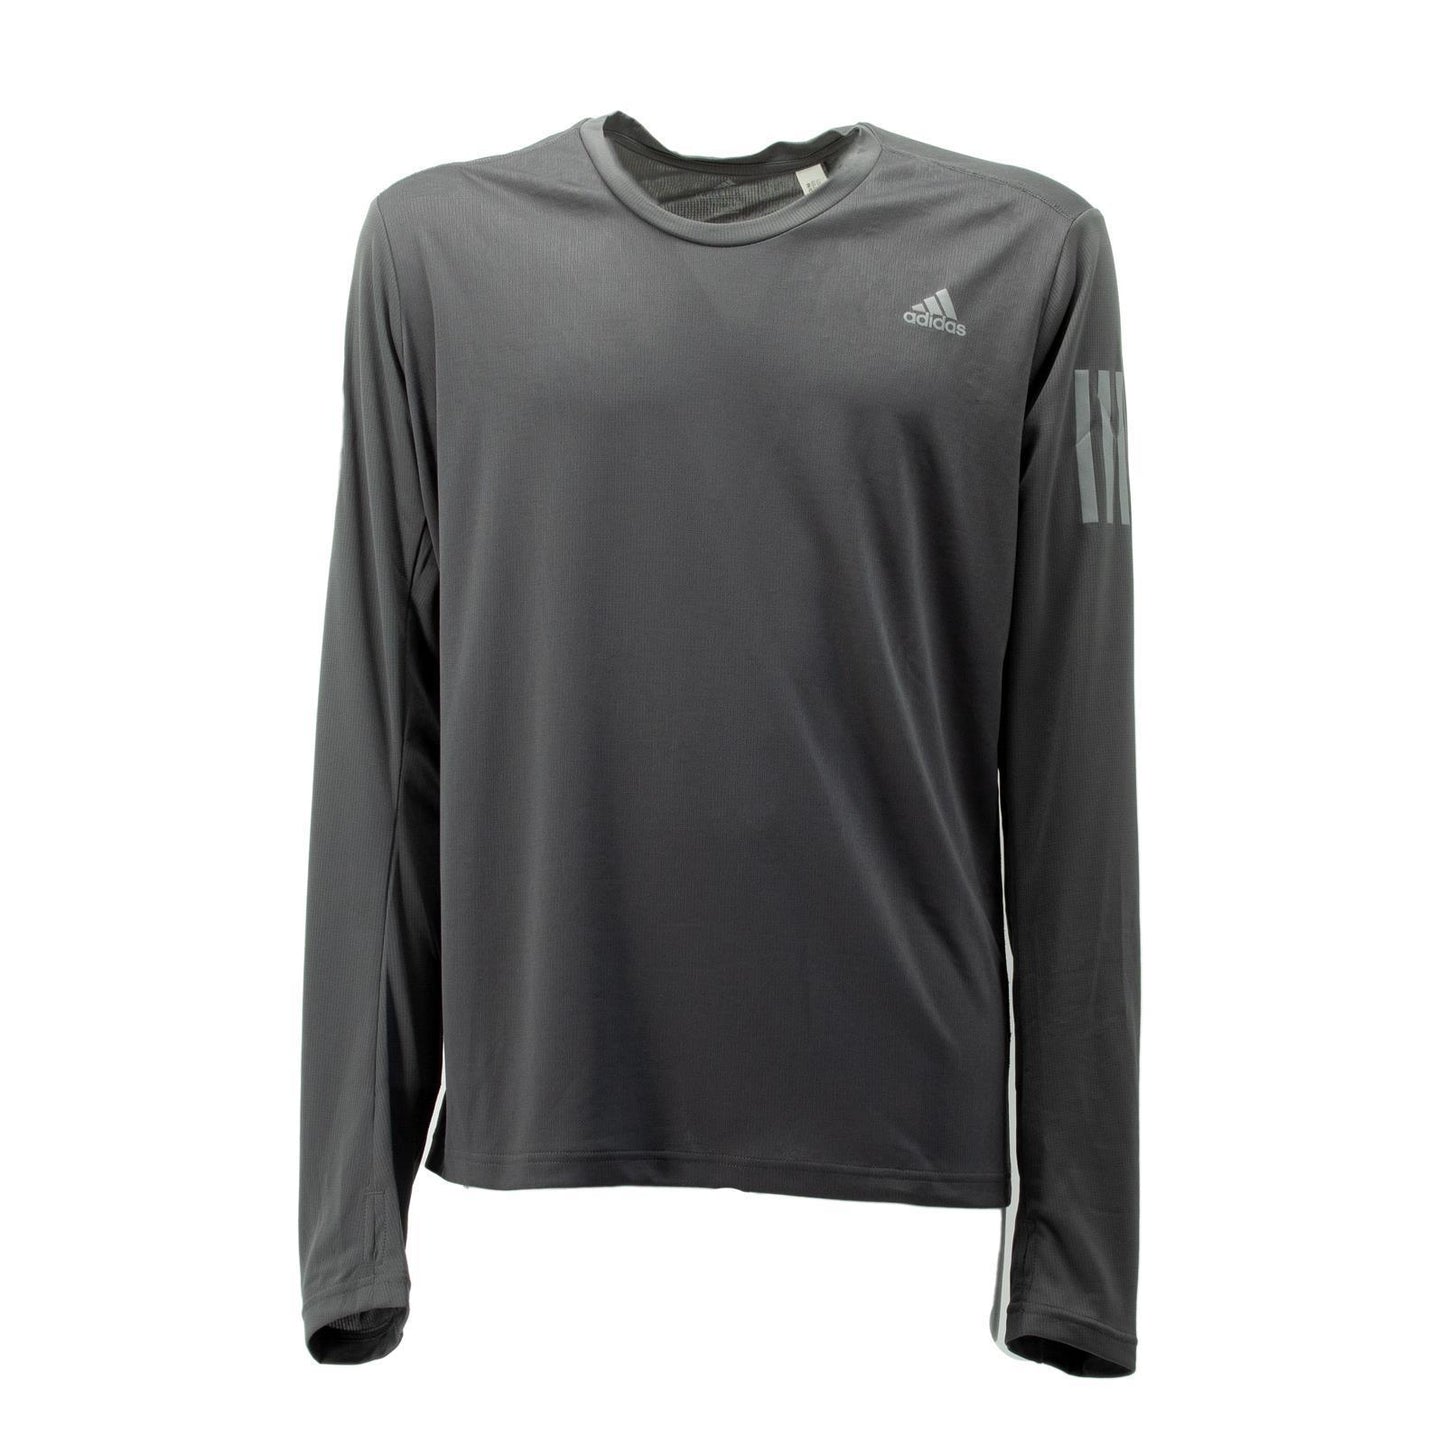 Adidas Own The Run Running Laufshirt Longsleeve Langarm Shirt Herren grau DZ2125